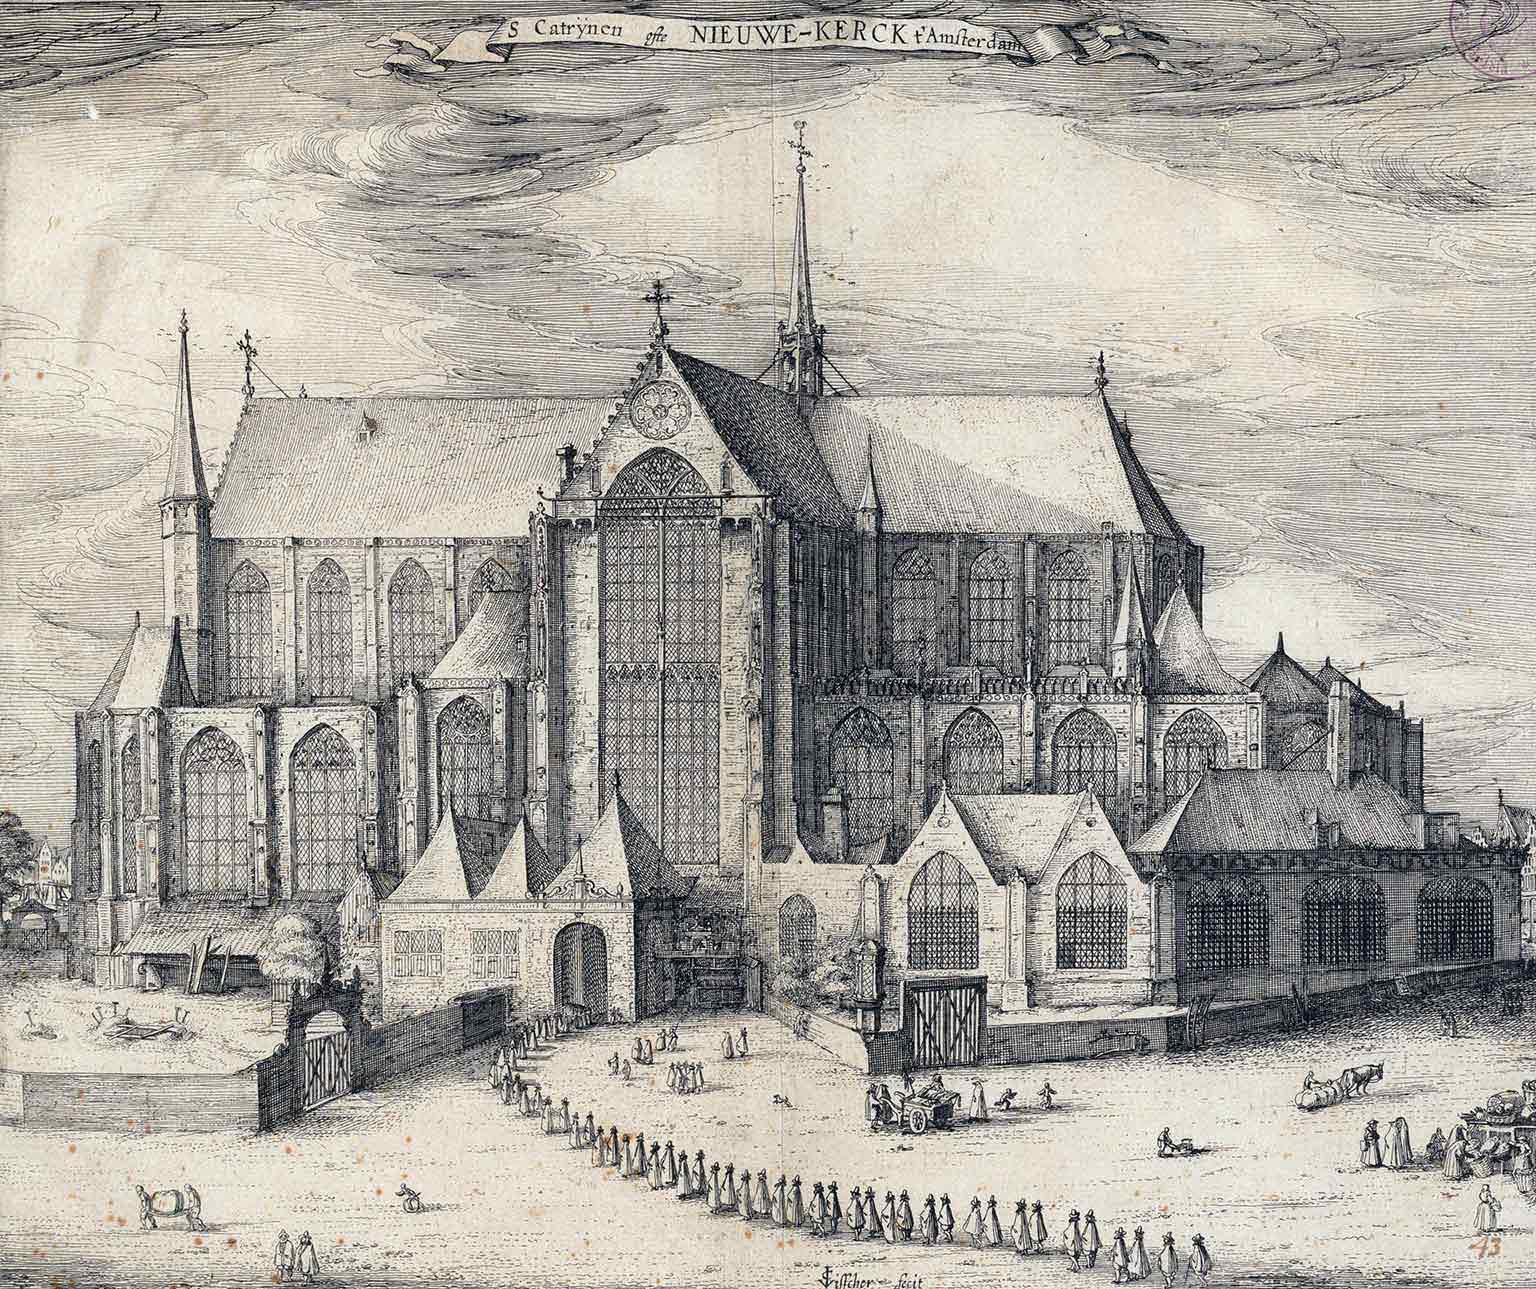 Nieuwe Kerk, Amsterdam, seen from the Dam side in 1613, drawing by Claes Jansz Visscher